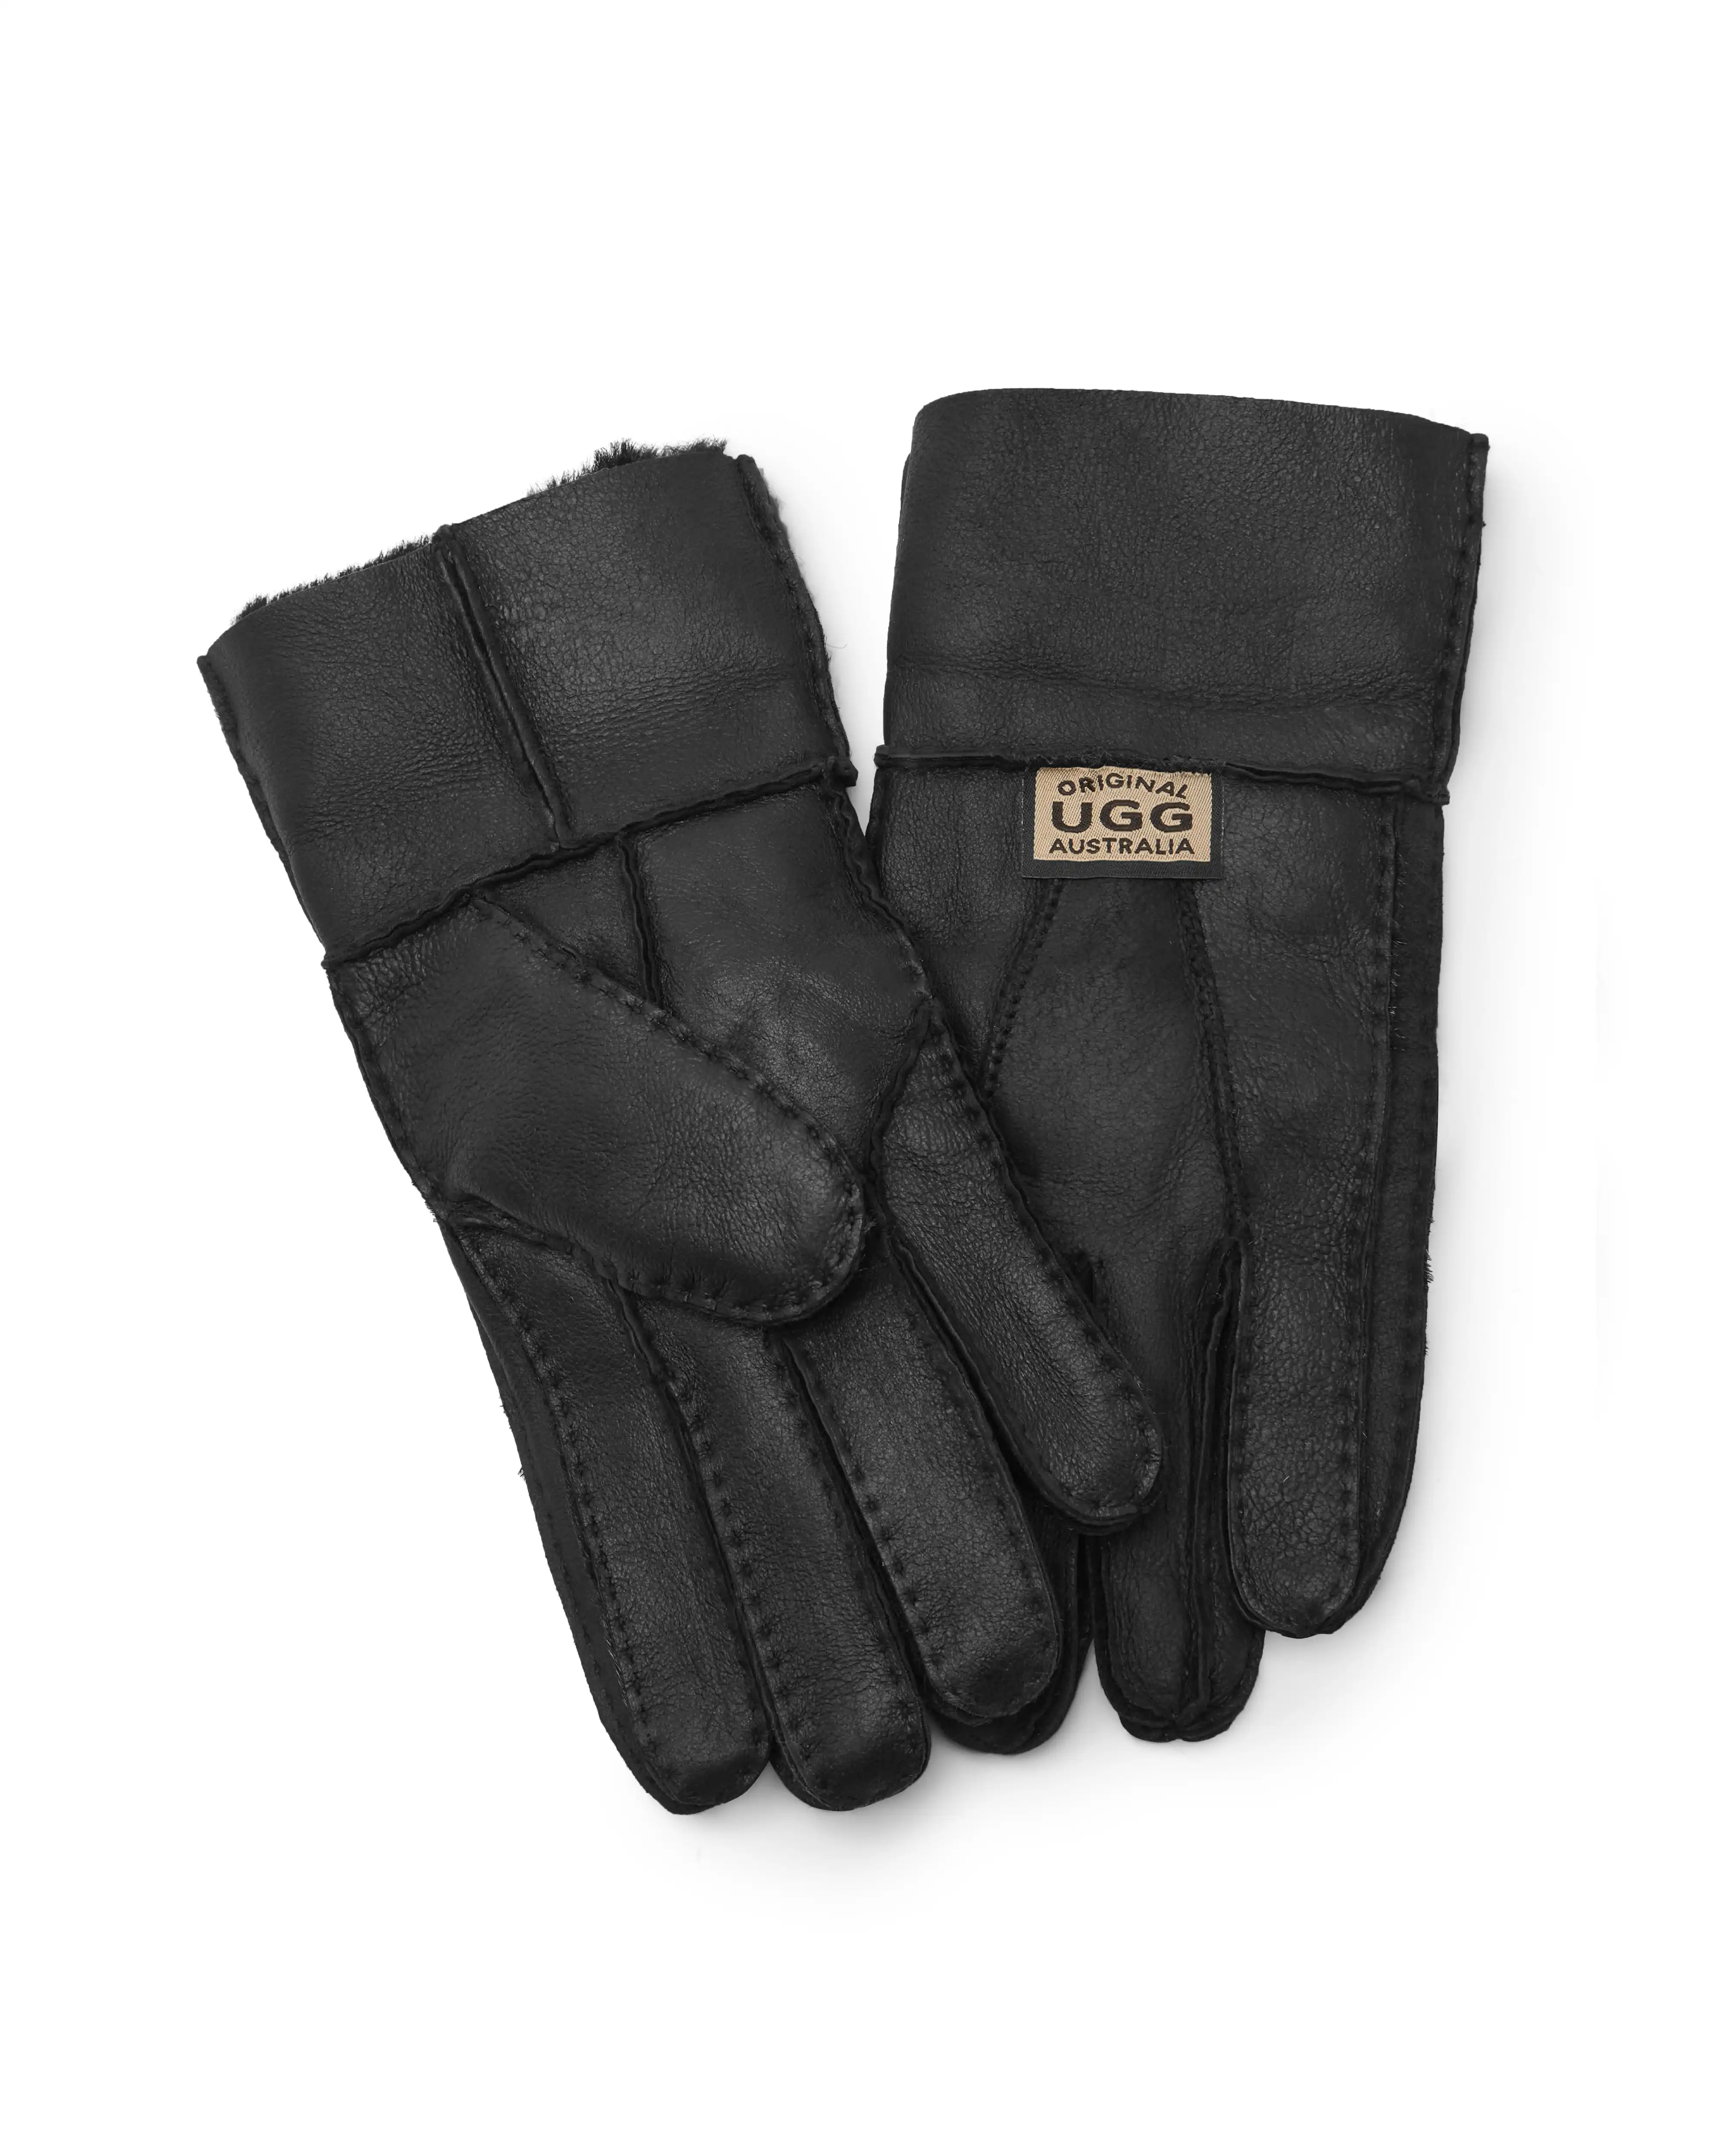 Original Ugg Australia Men's Gloves - Black